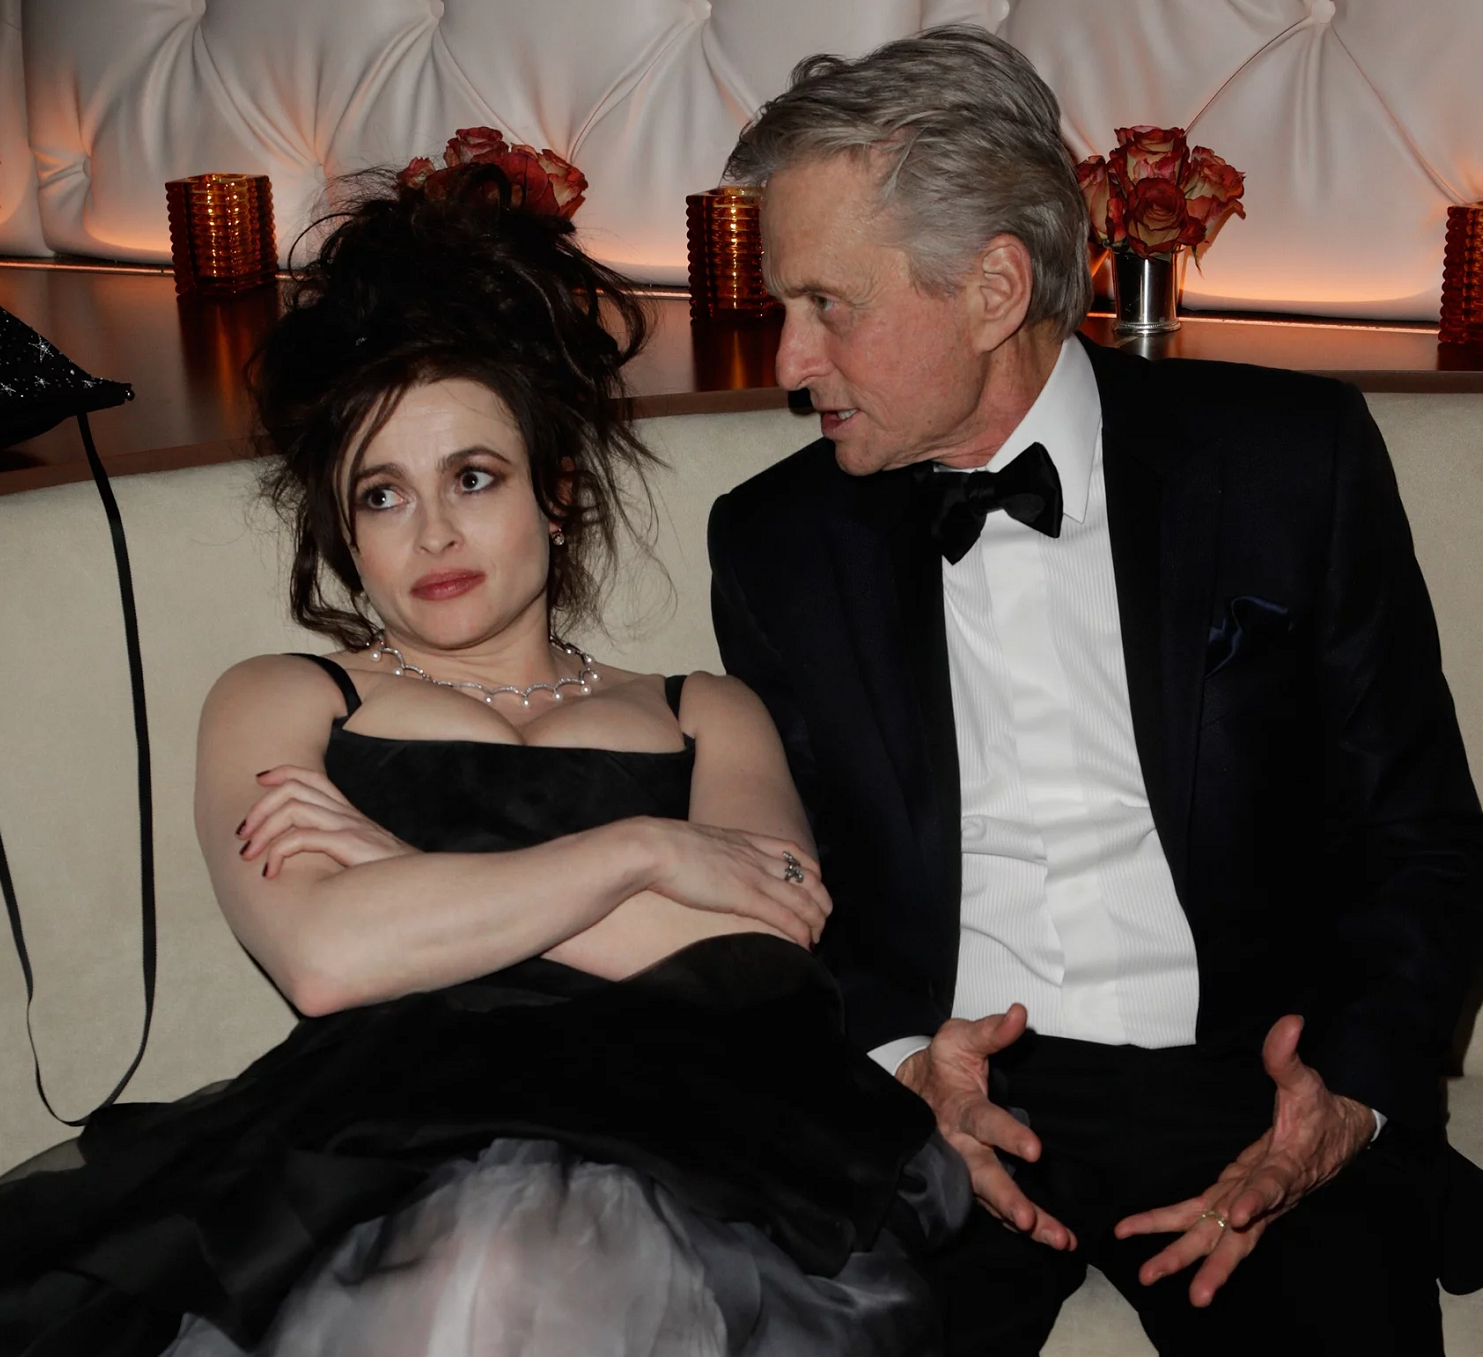 Helena Bonham Carter looks thrilled talking to Michael Douglas.